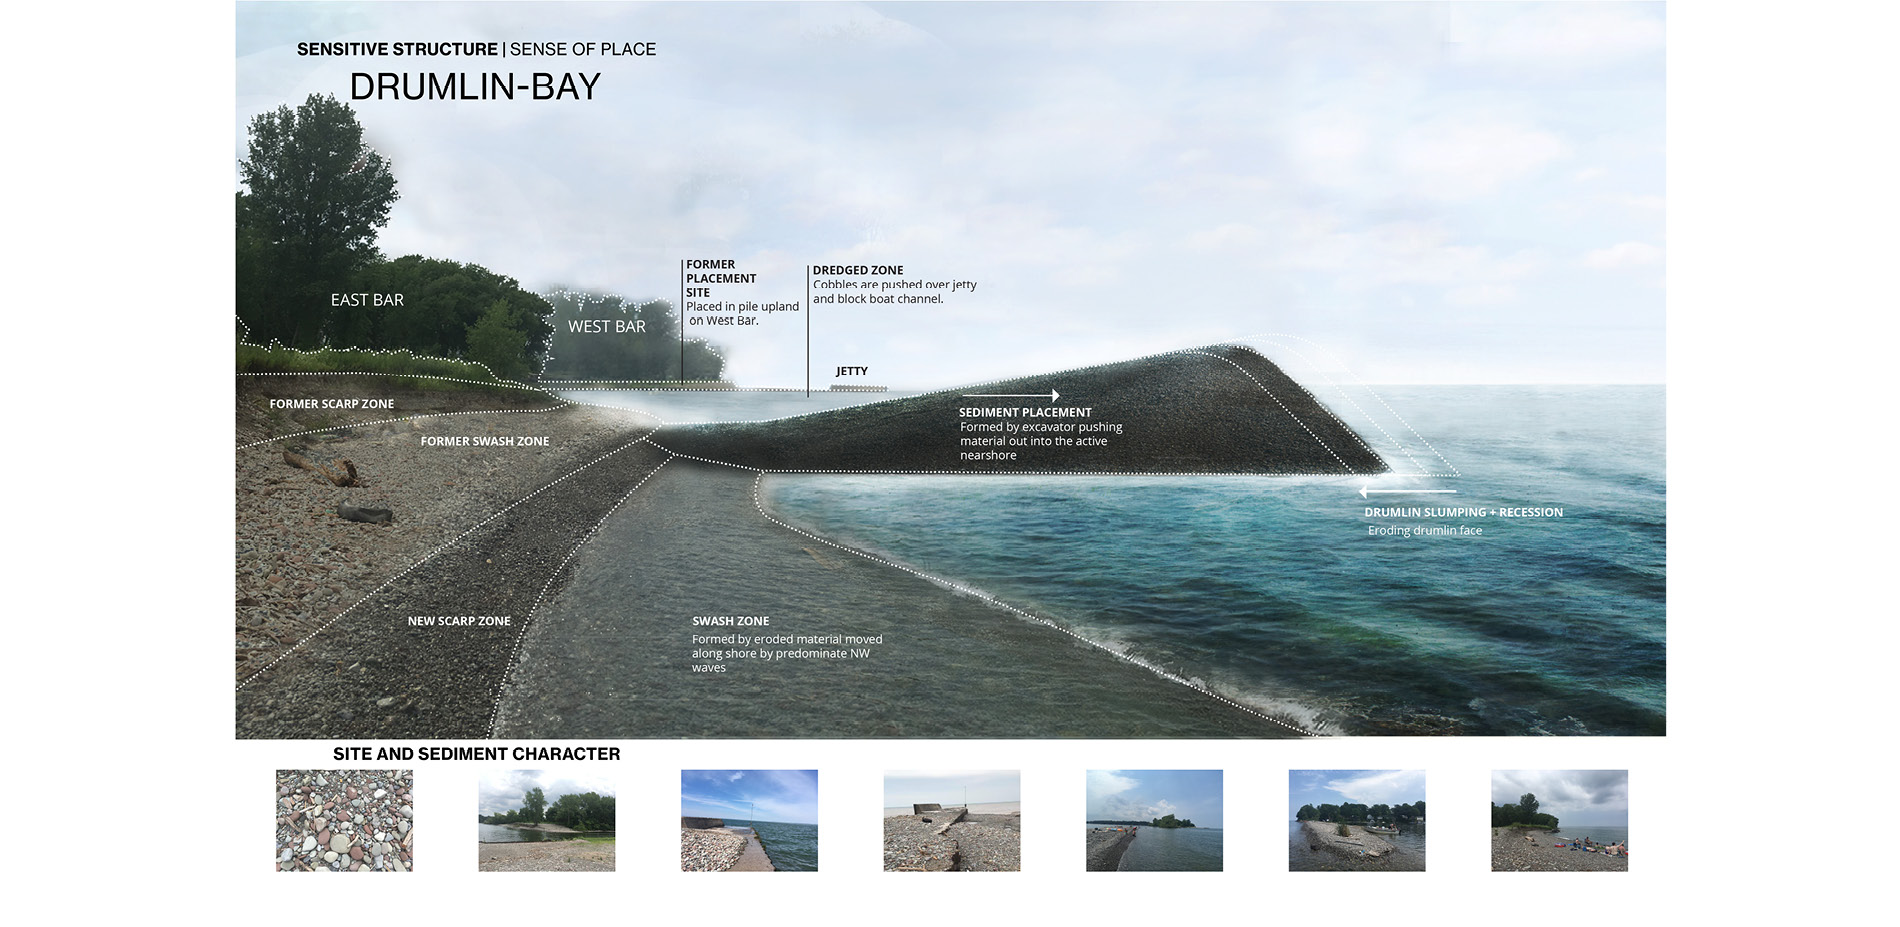 Drumlin Bay Complex: Sensitive Structure